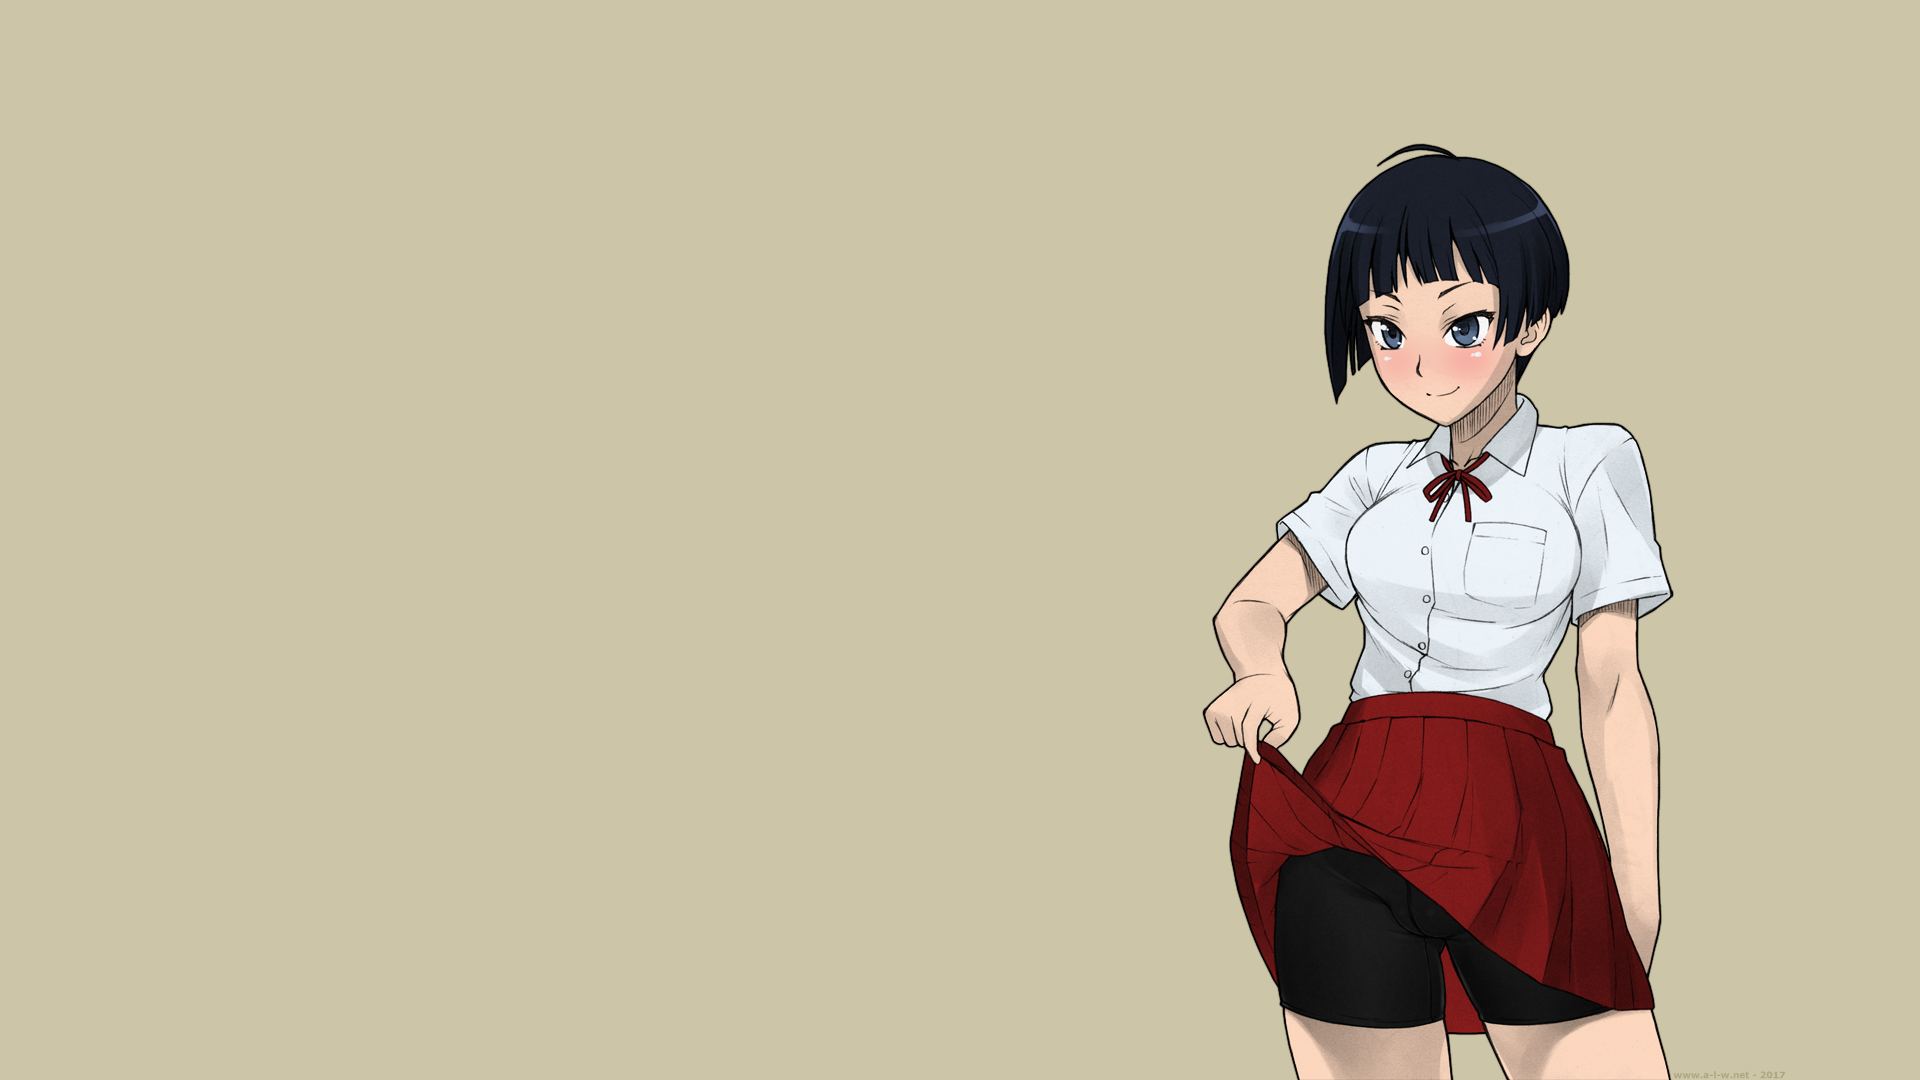 BANG YOU Short Hair Blue Eyes Black Hair School Uniform Schoolgirl Spats Tomboys Anime Manga Anime G 1920x1080